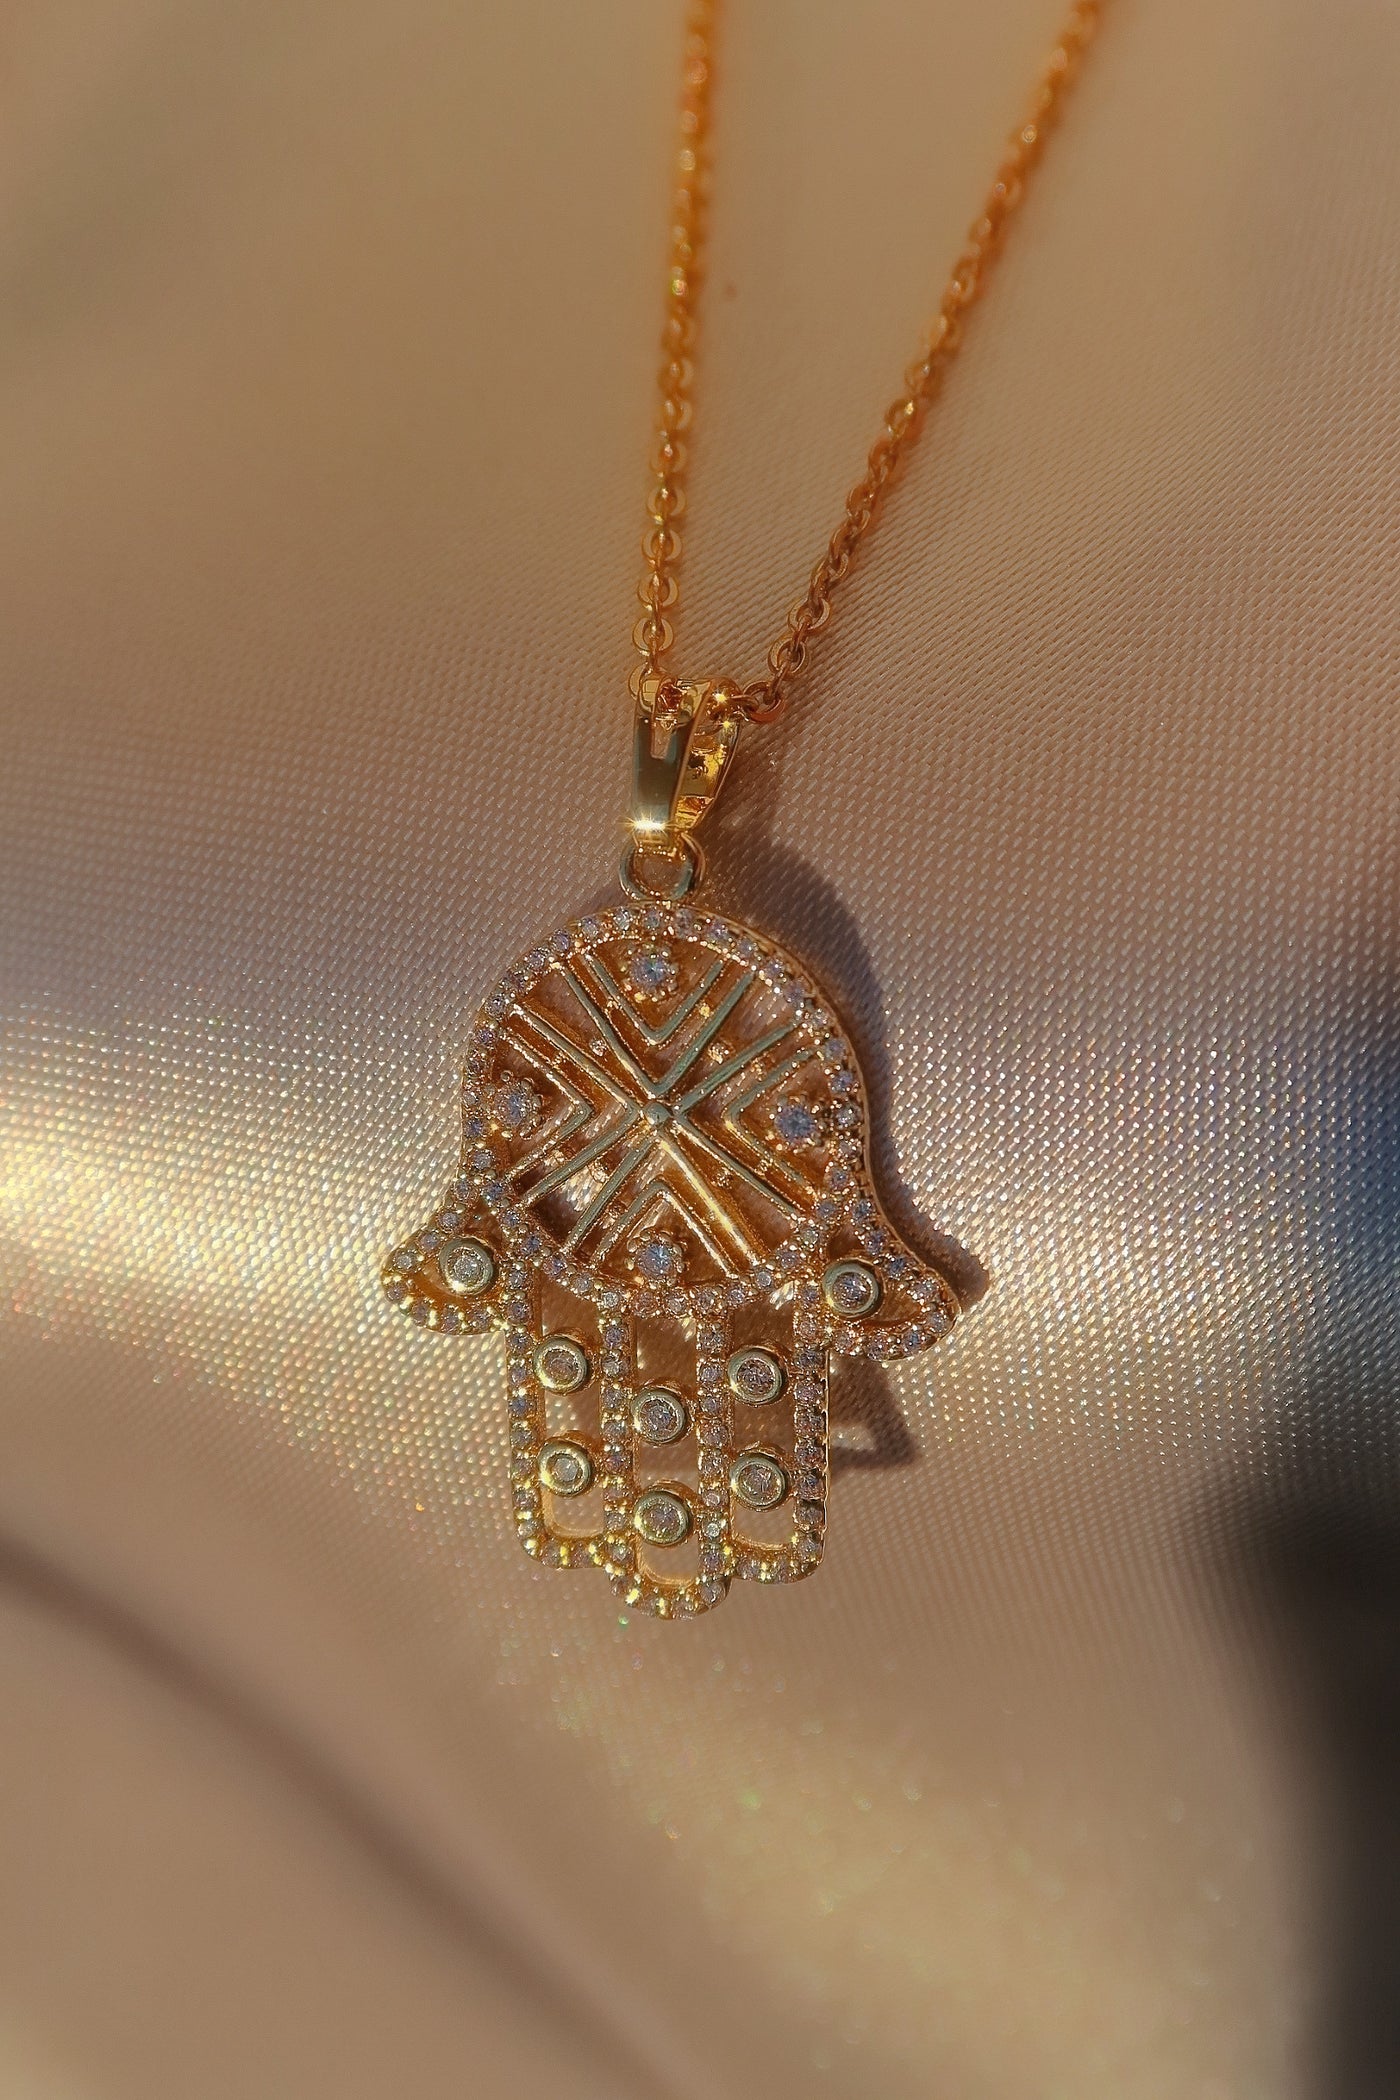 Hamsa Hand Necklace - Gold Filled